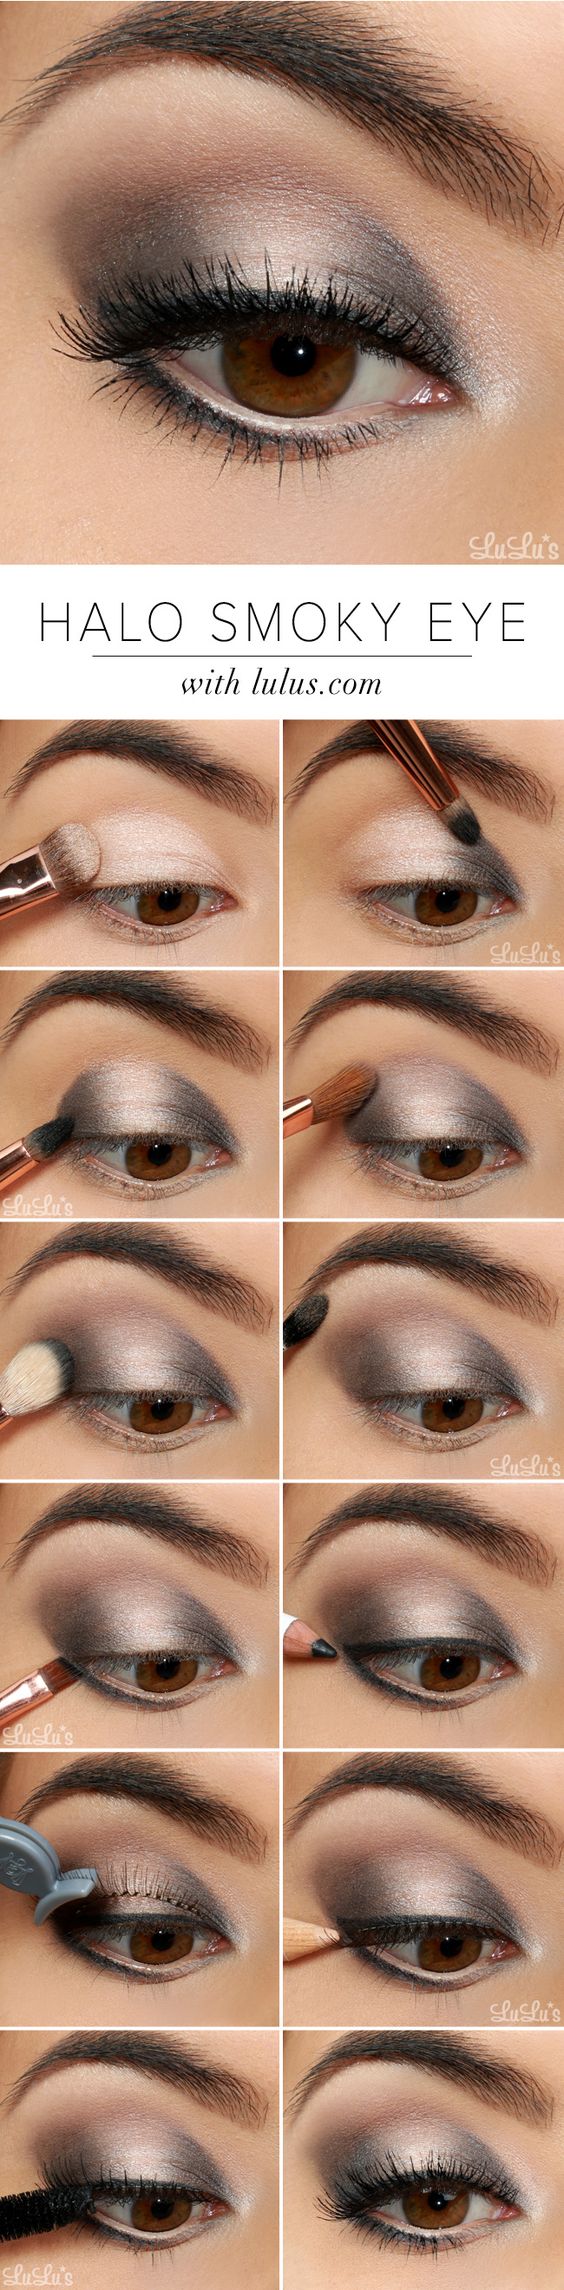 32 easy step by step eyeshadow tutorials for beginners